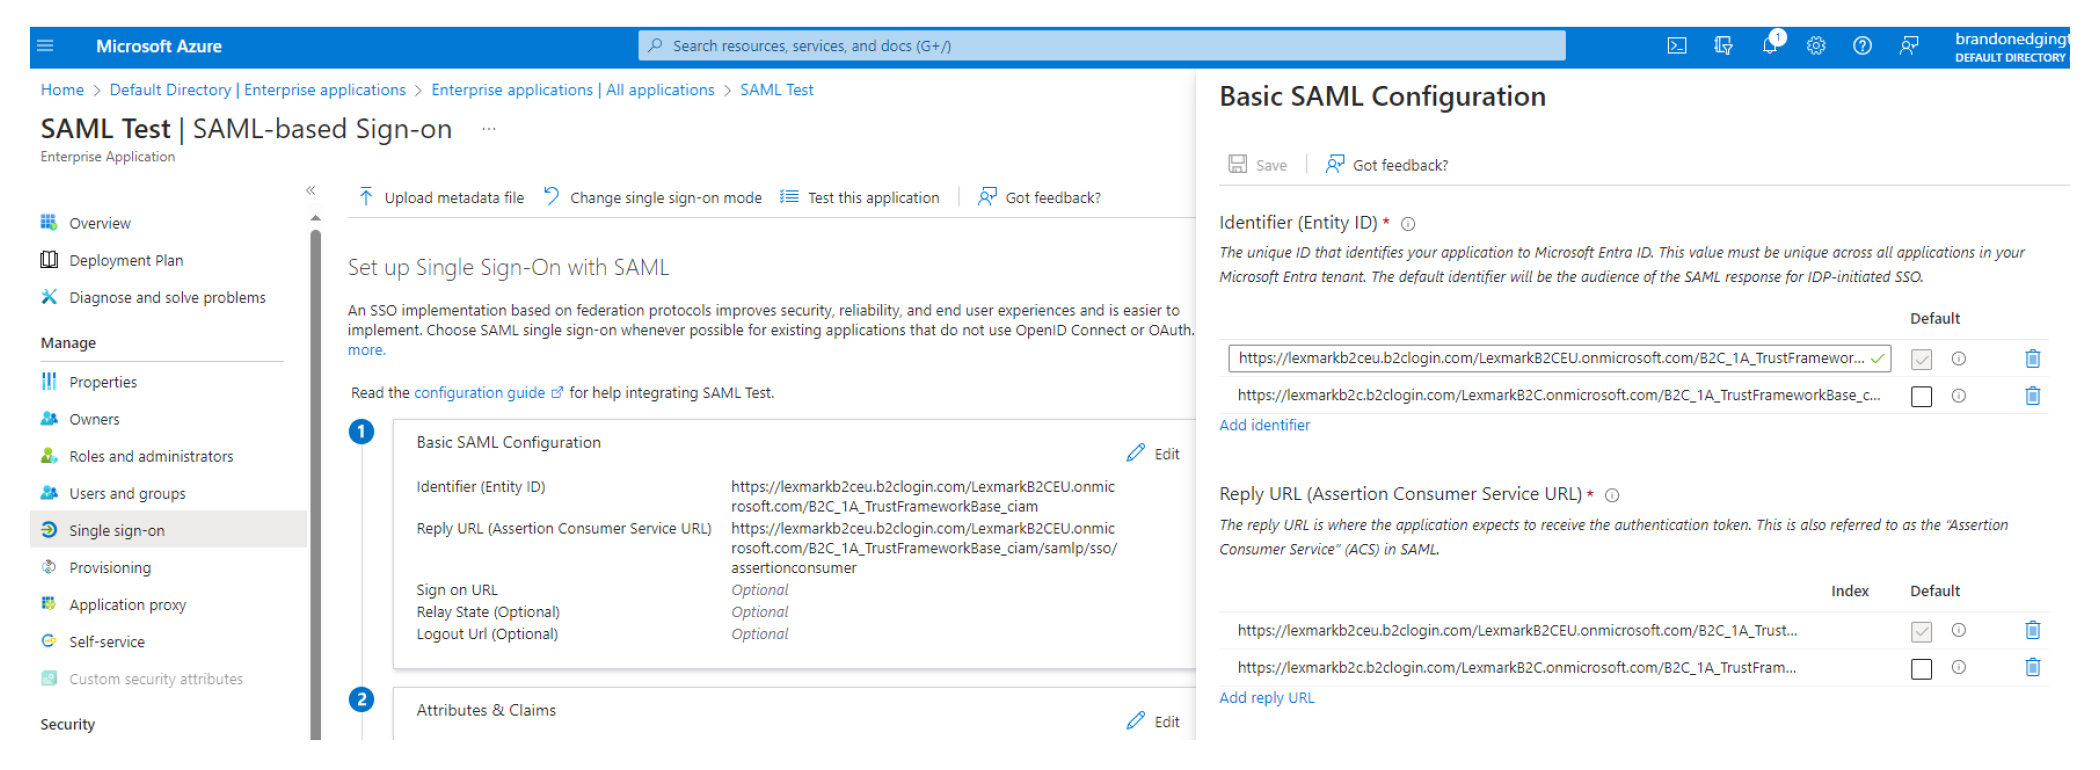 A screenshot showing the save option on the Basic SAML Configuration window.